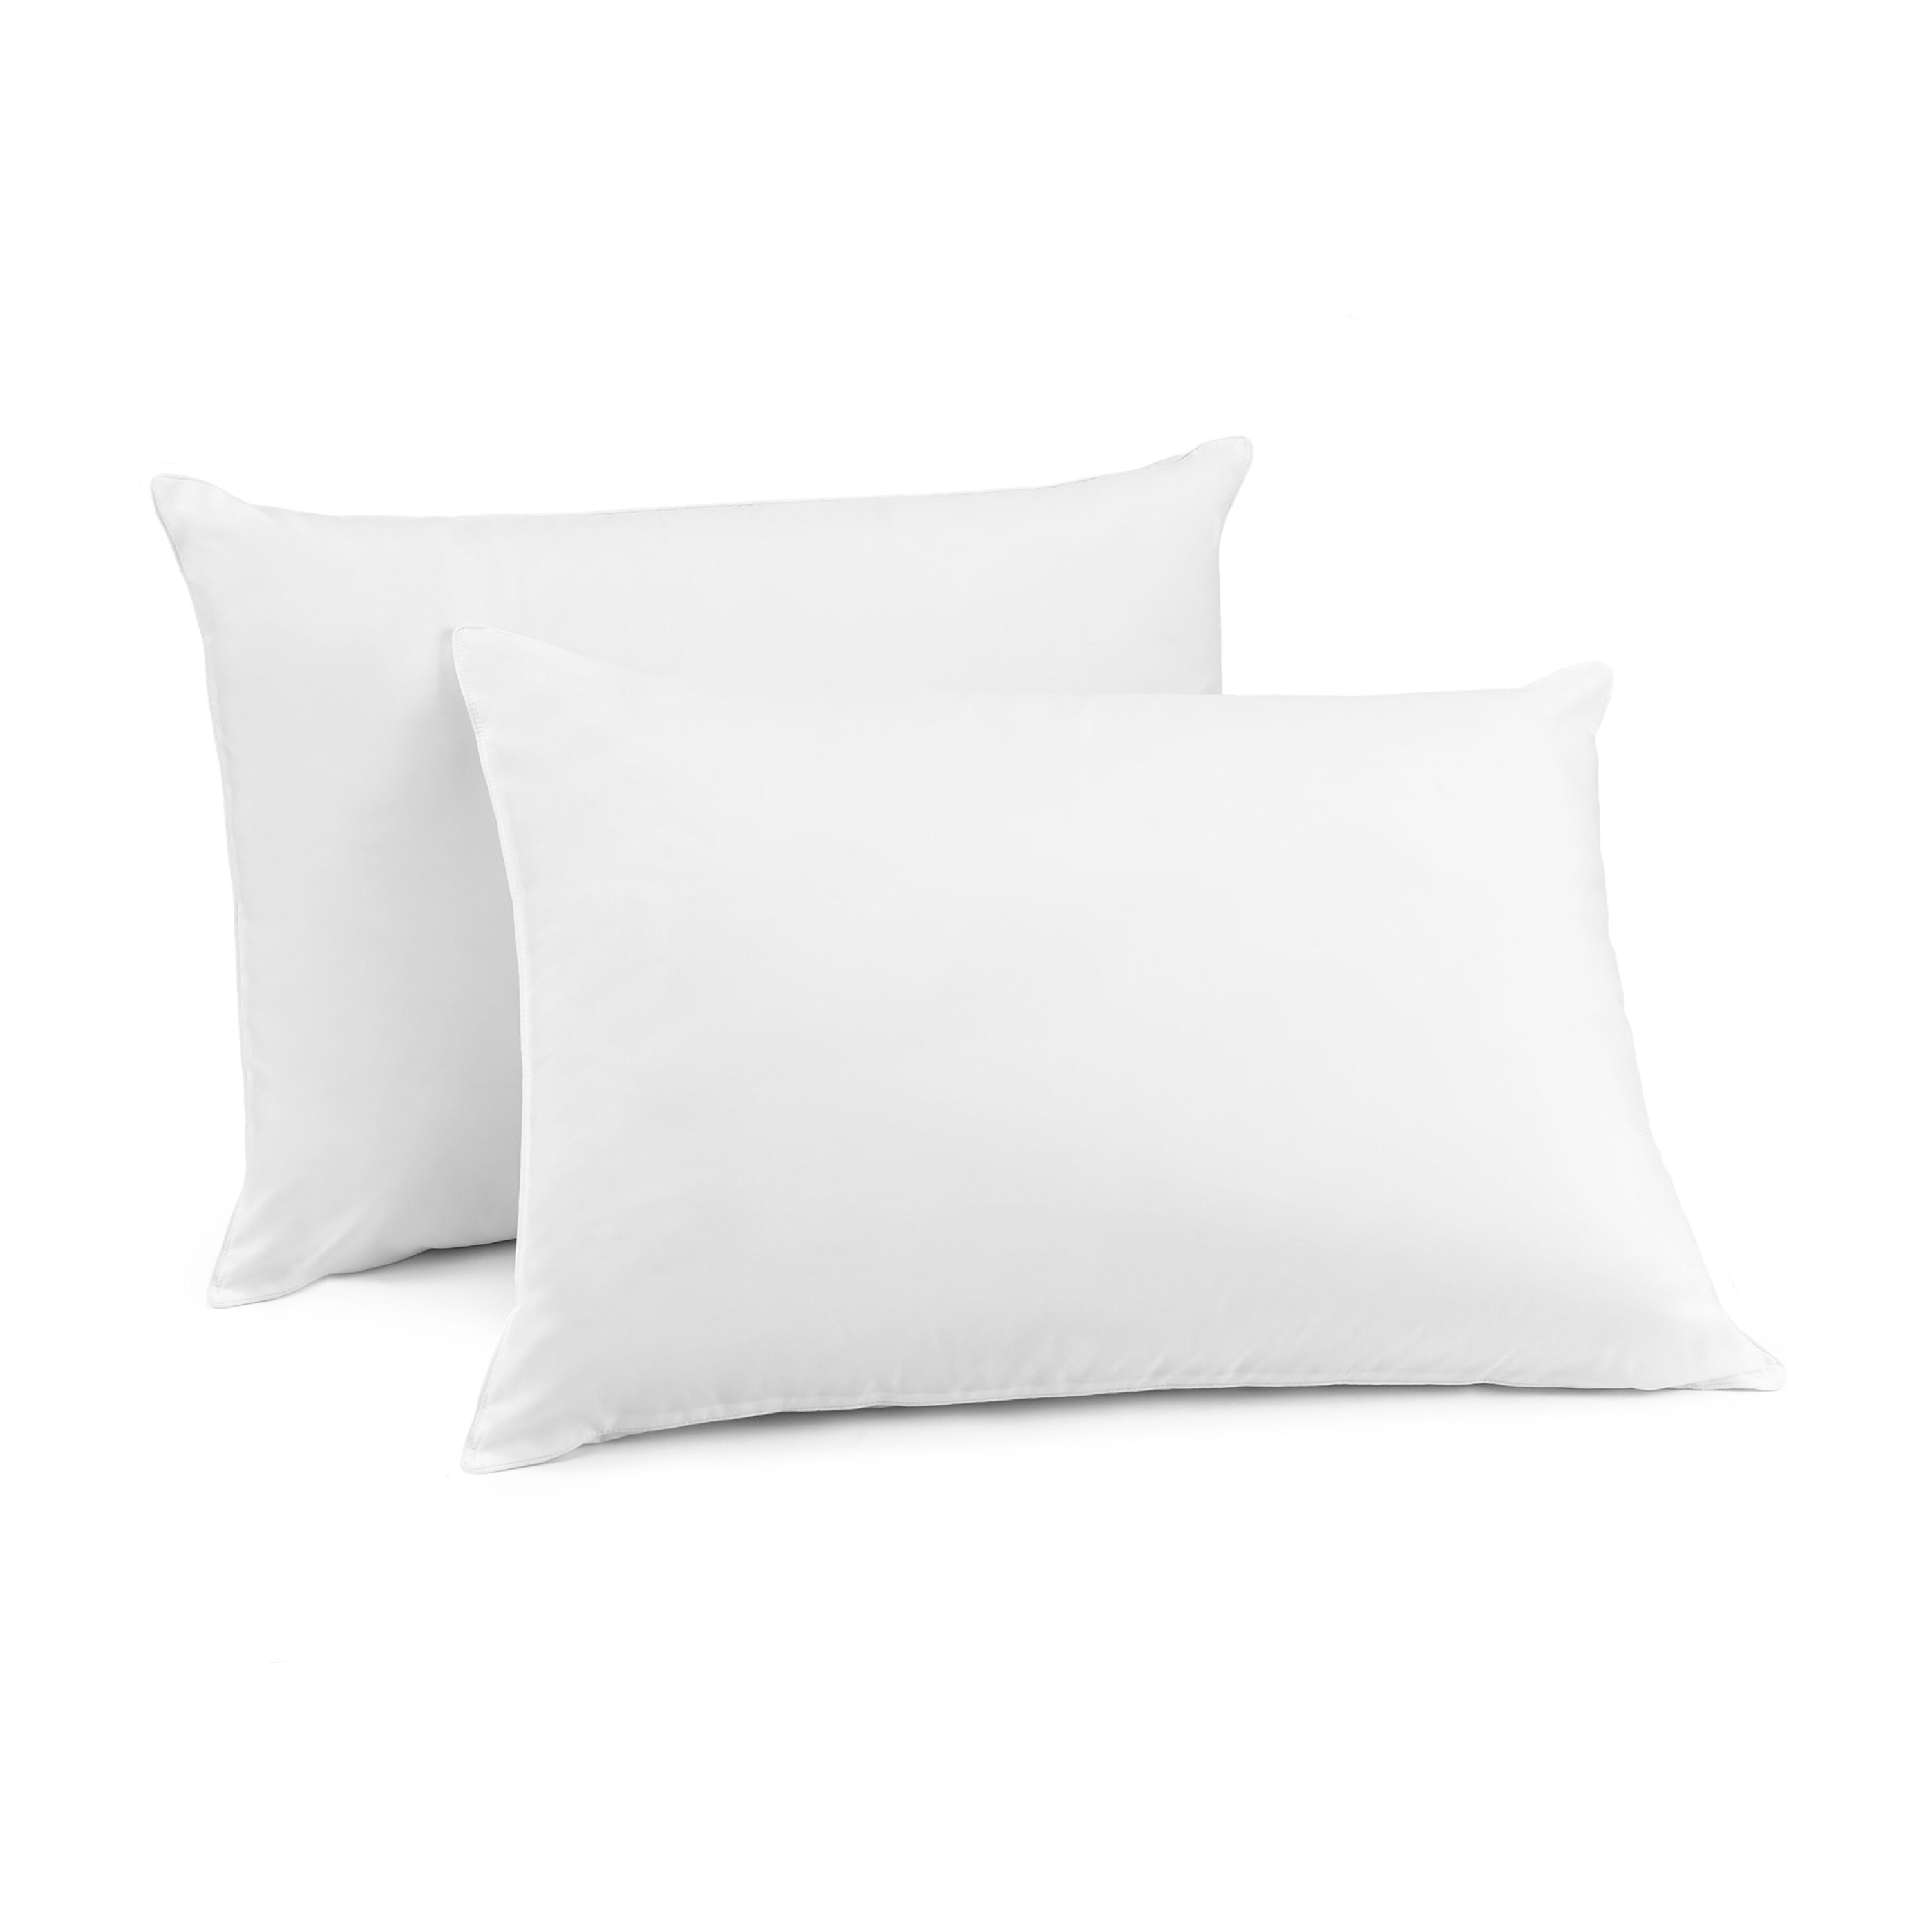 hollander pillows